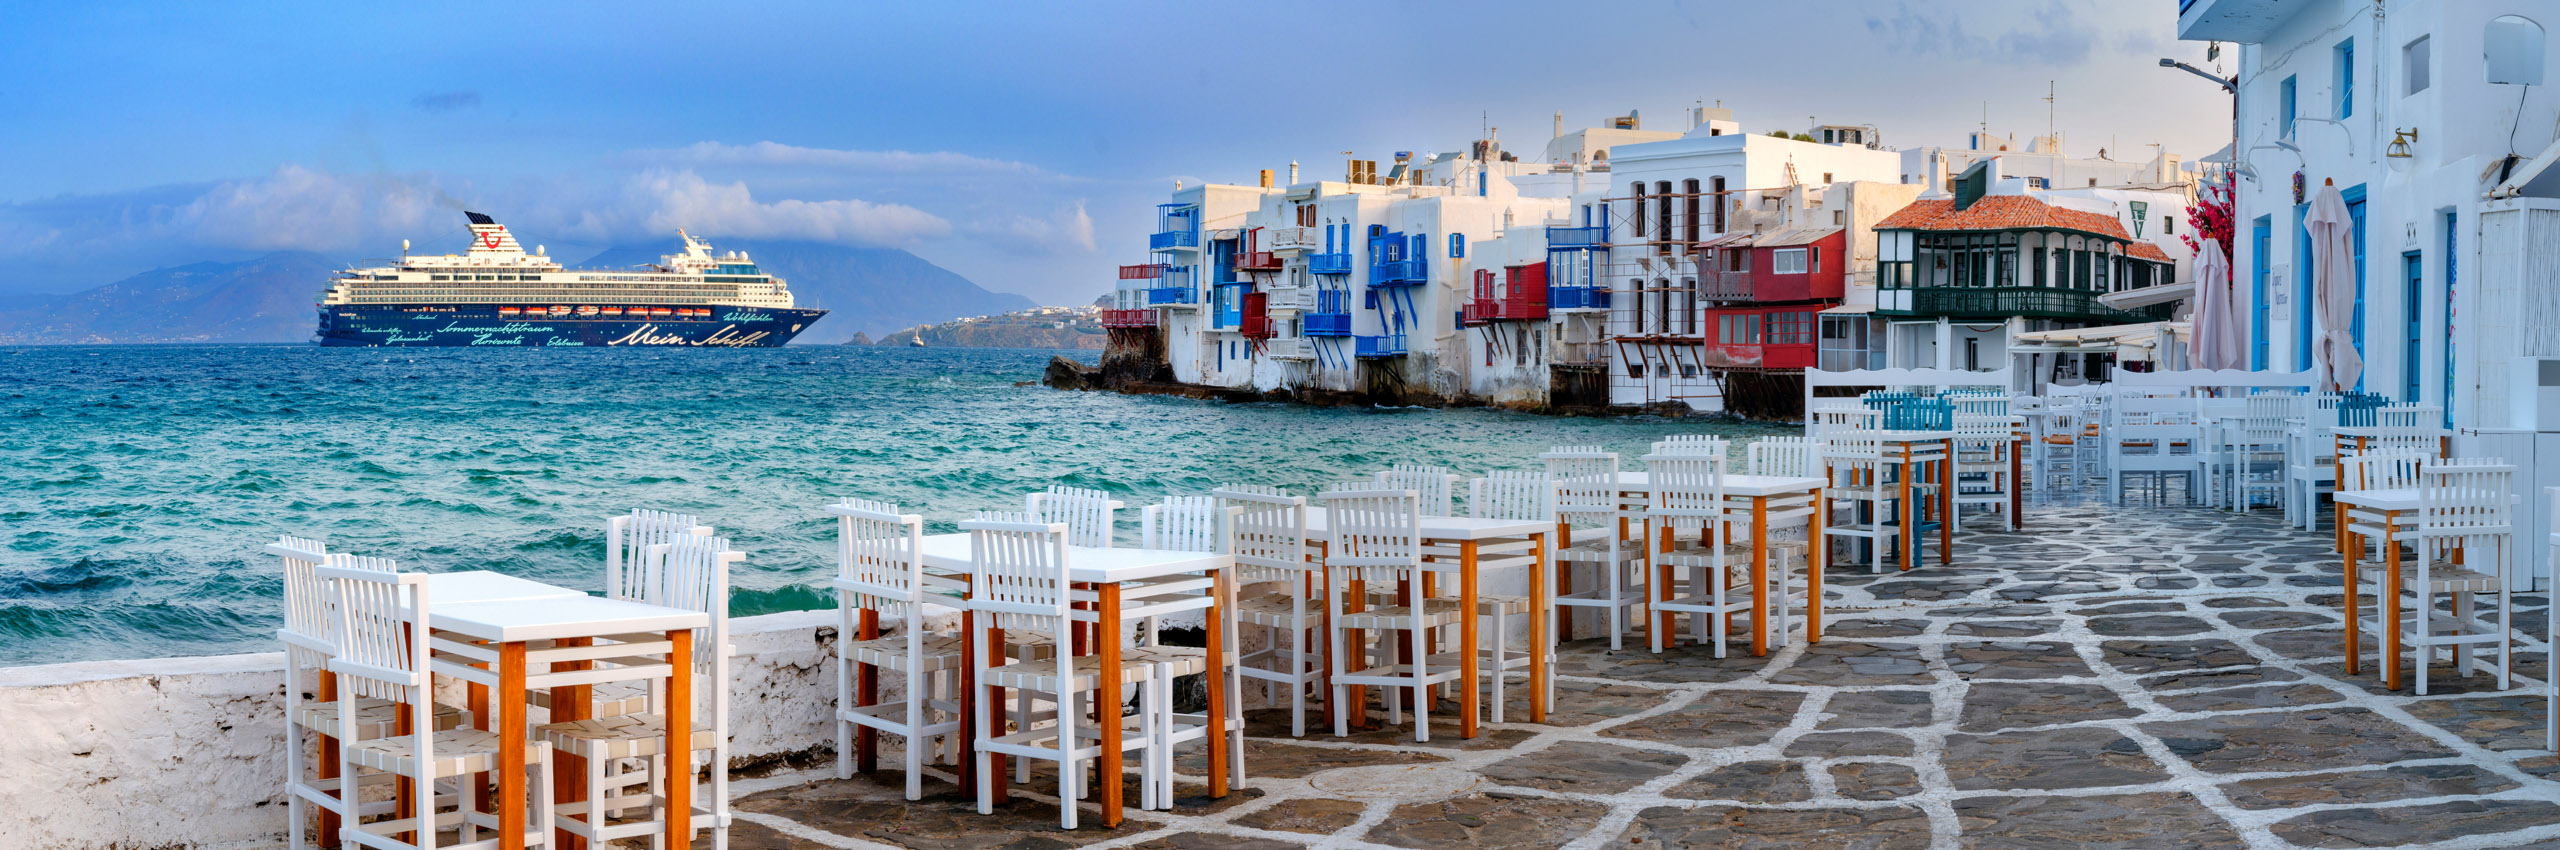 41229937 | Greece/Aegean islands, Cyclades, Mikonos island, Mykonos | © Susanne Kremer/HUBER IMAGES